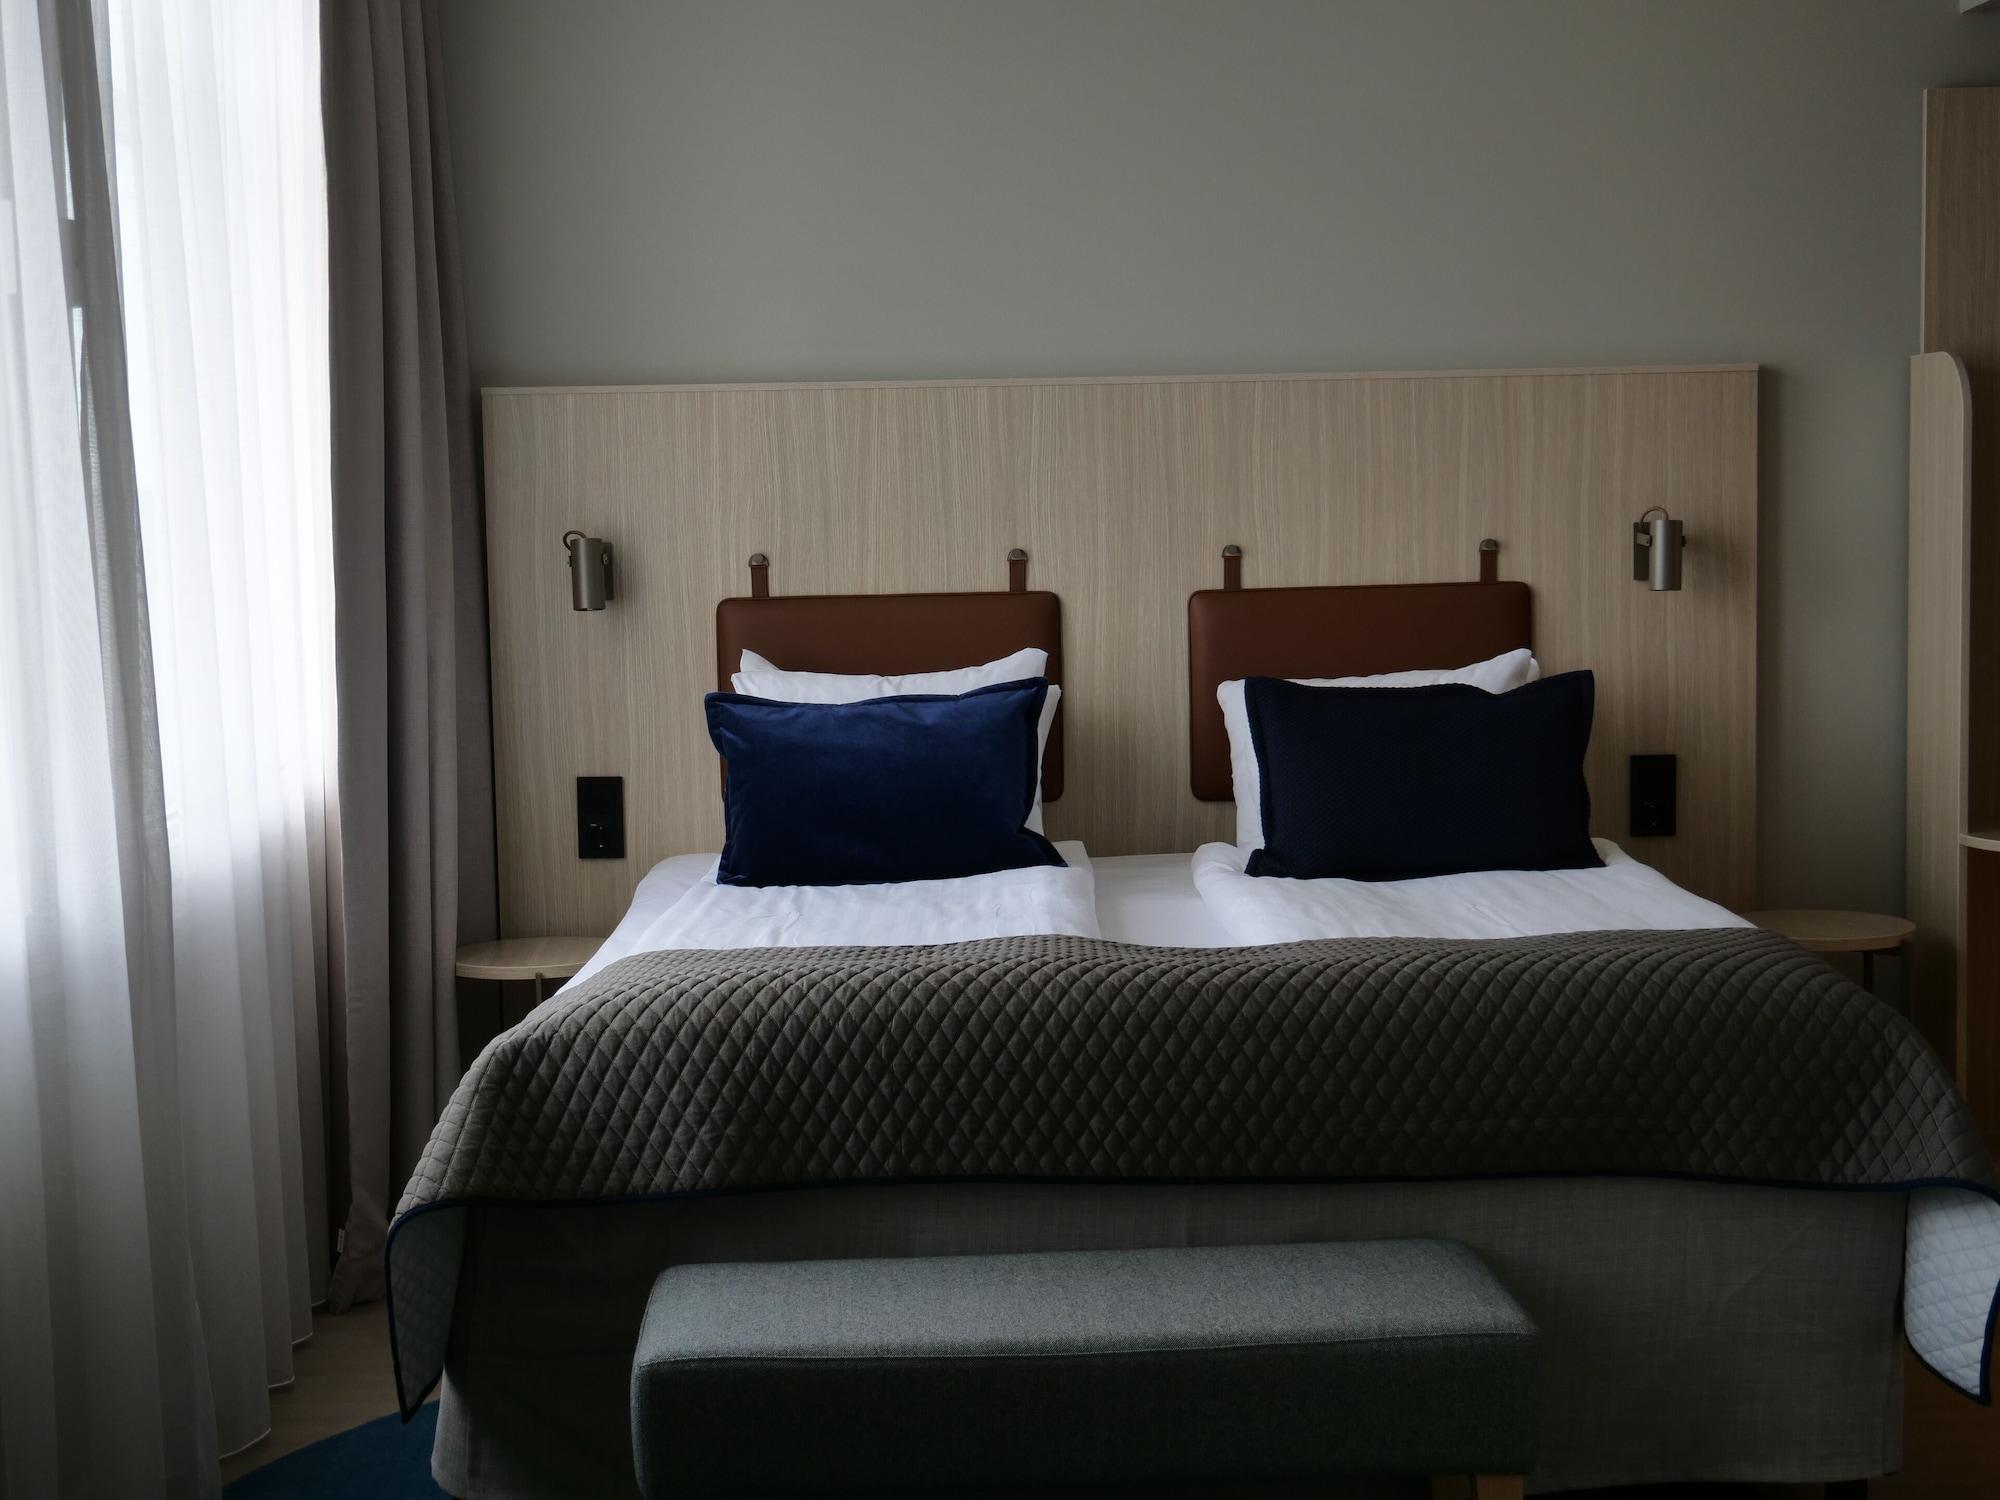 Quality Hotel Arlanda Xpo Extérieur photo